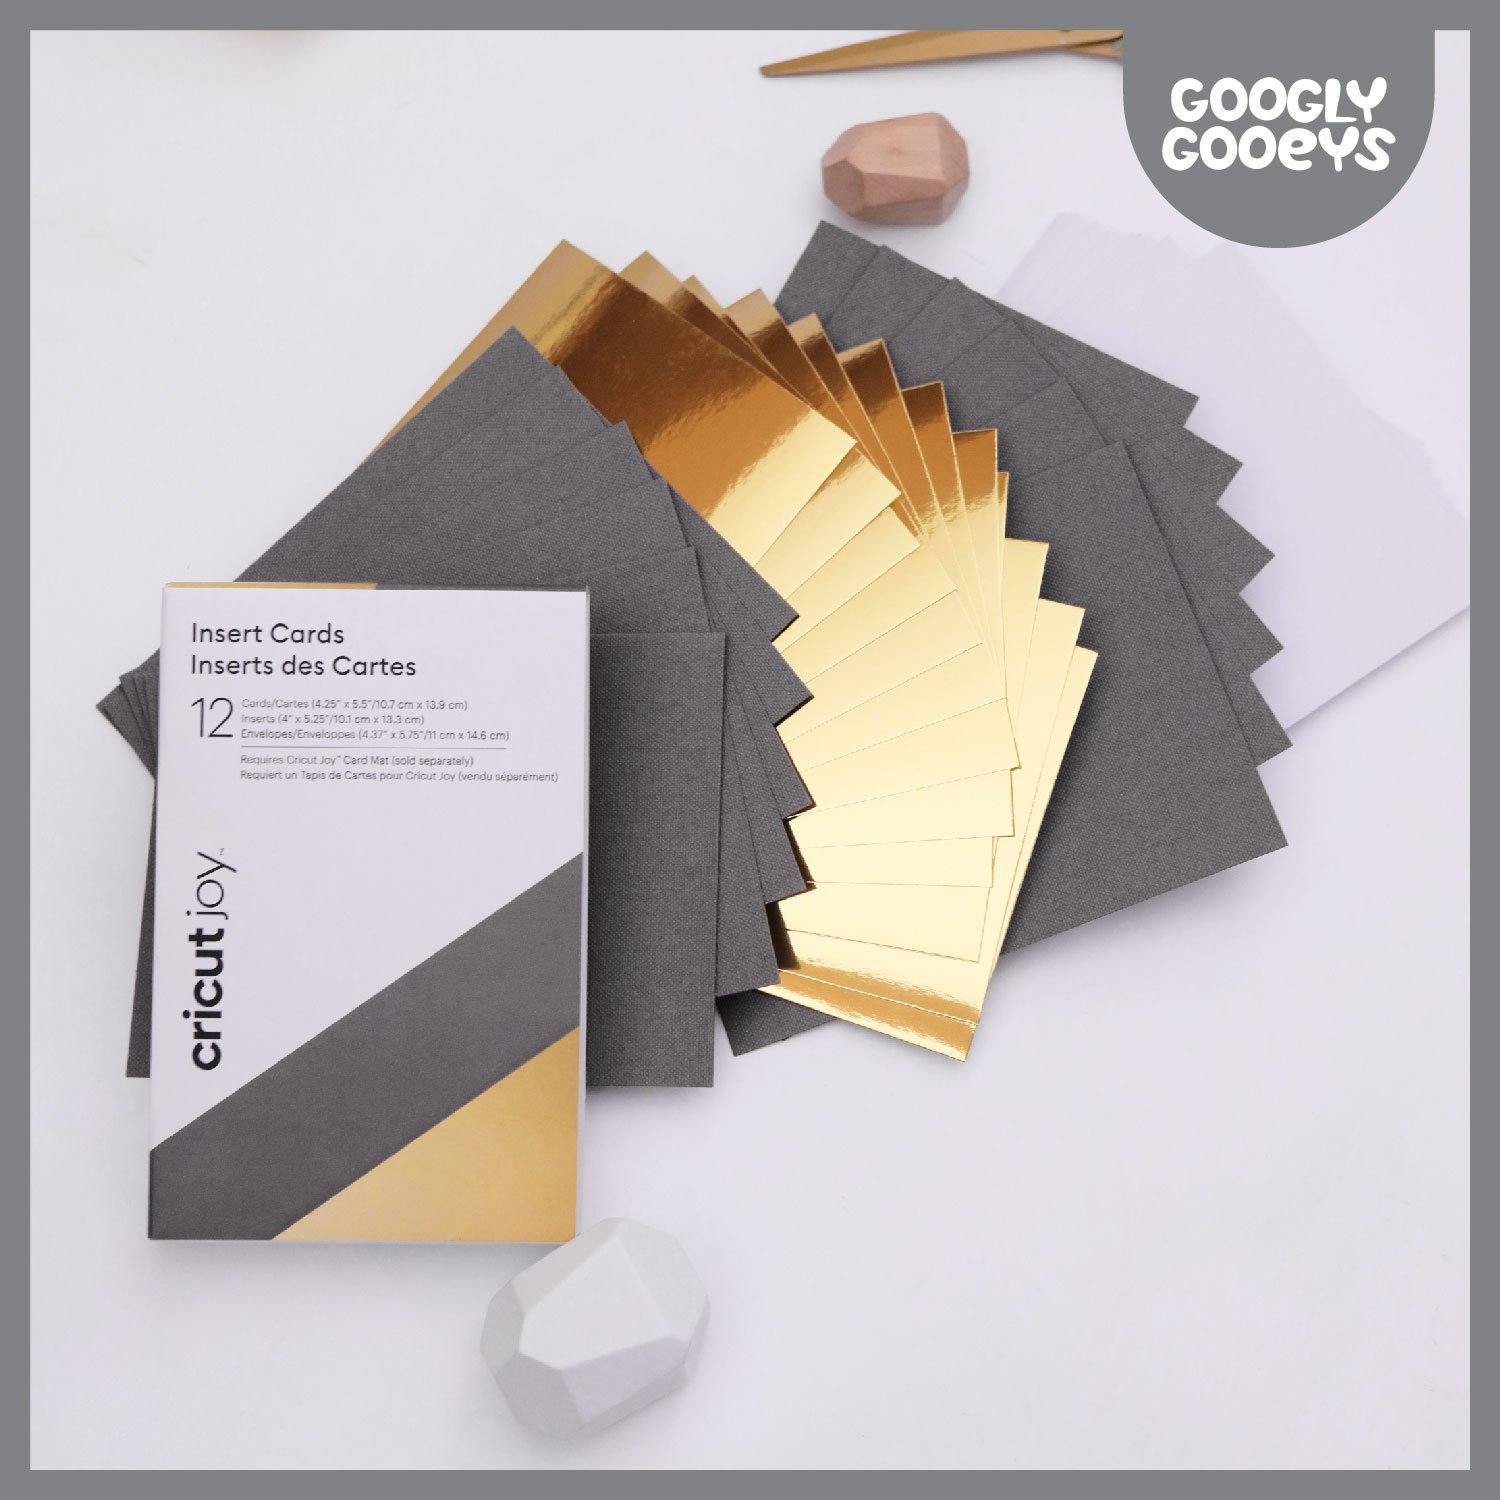 Cricut Joy Insert Cards, Gray/Gold Metallic-Cricut Joy Accessories-[Product vendor]-GooglyGooeys-DIY-Crafts-Philippines